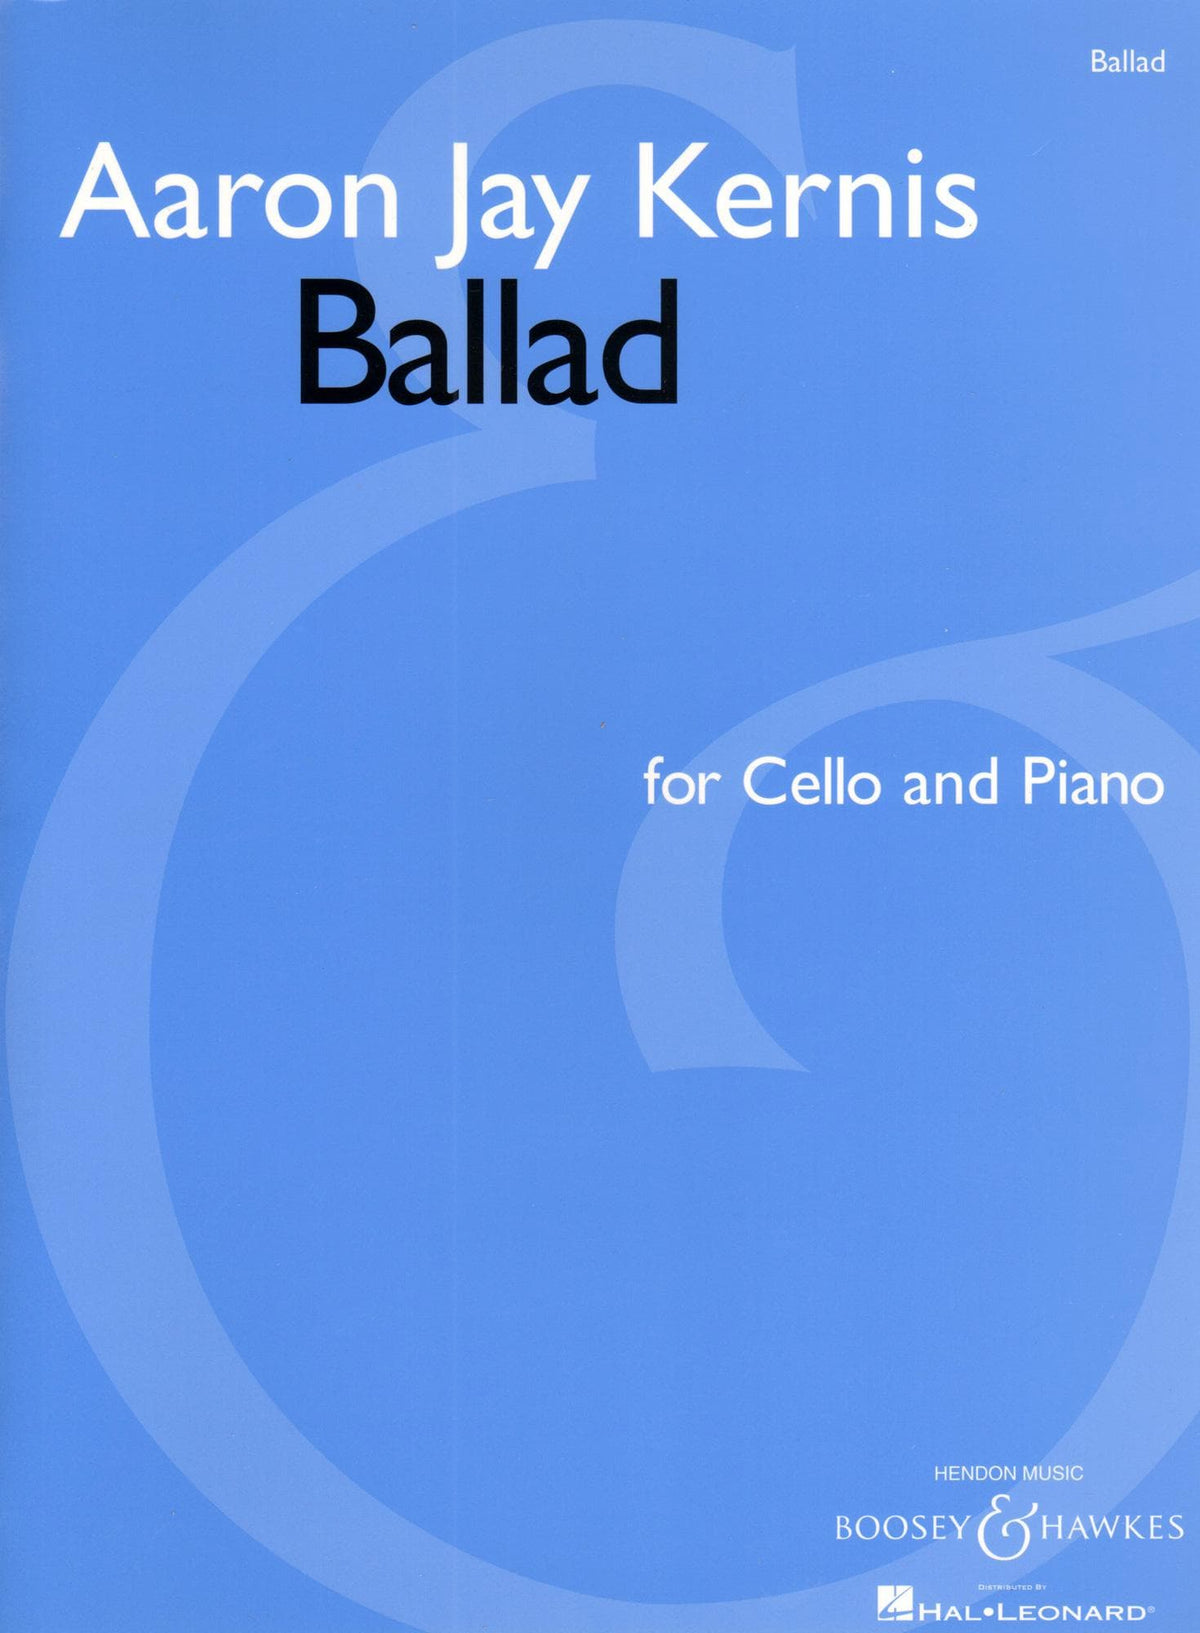 Kernis, Aaron Jay - Ballad - Cello and Piano - Boosey & Hawkes Edition